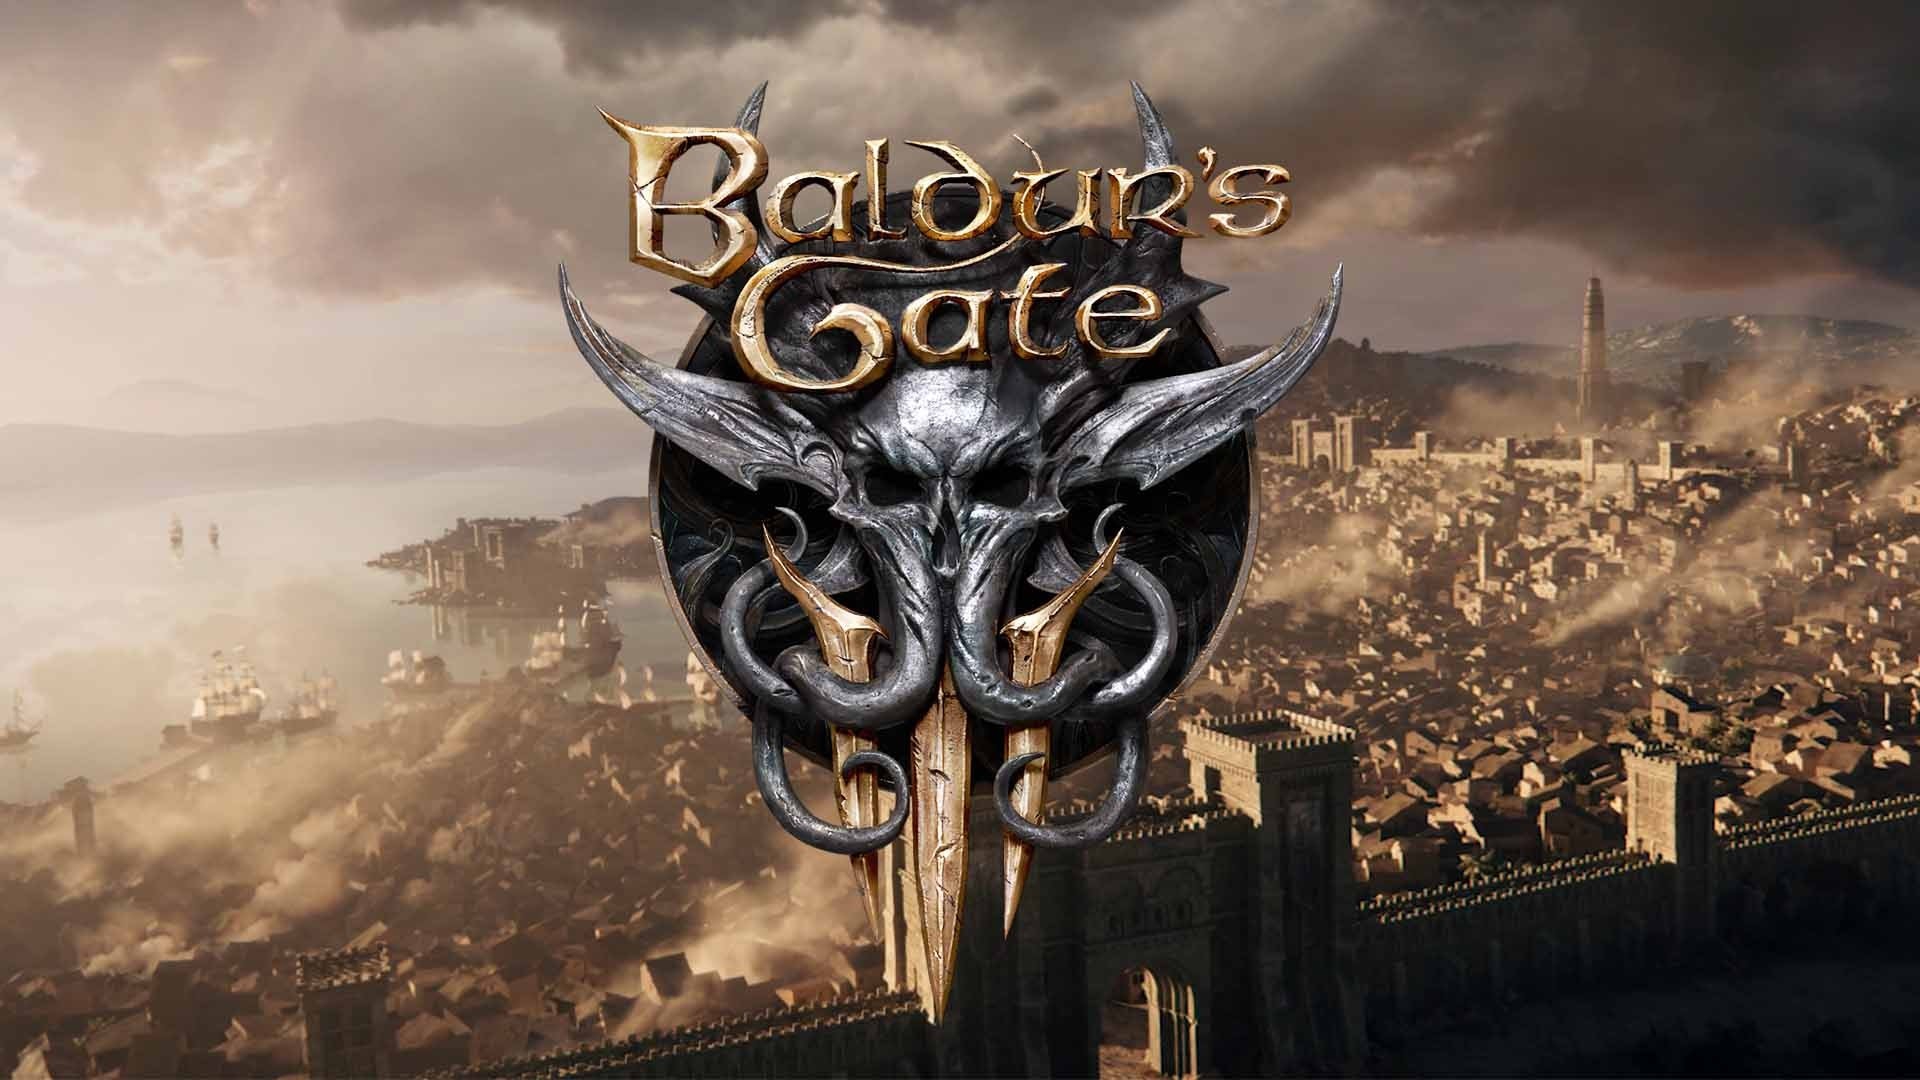 Baldur's Gate 3 un teaser per la data ufficiale